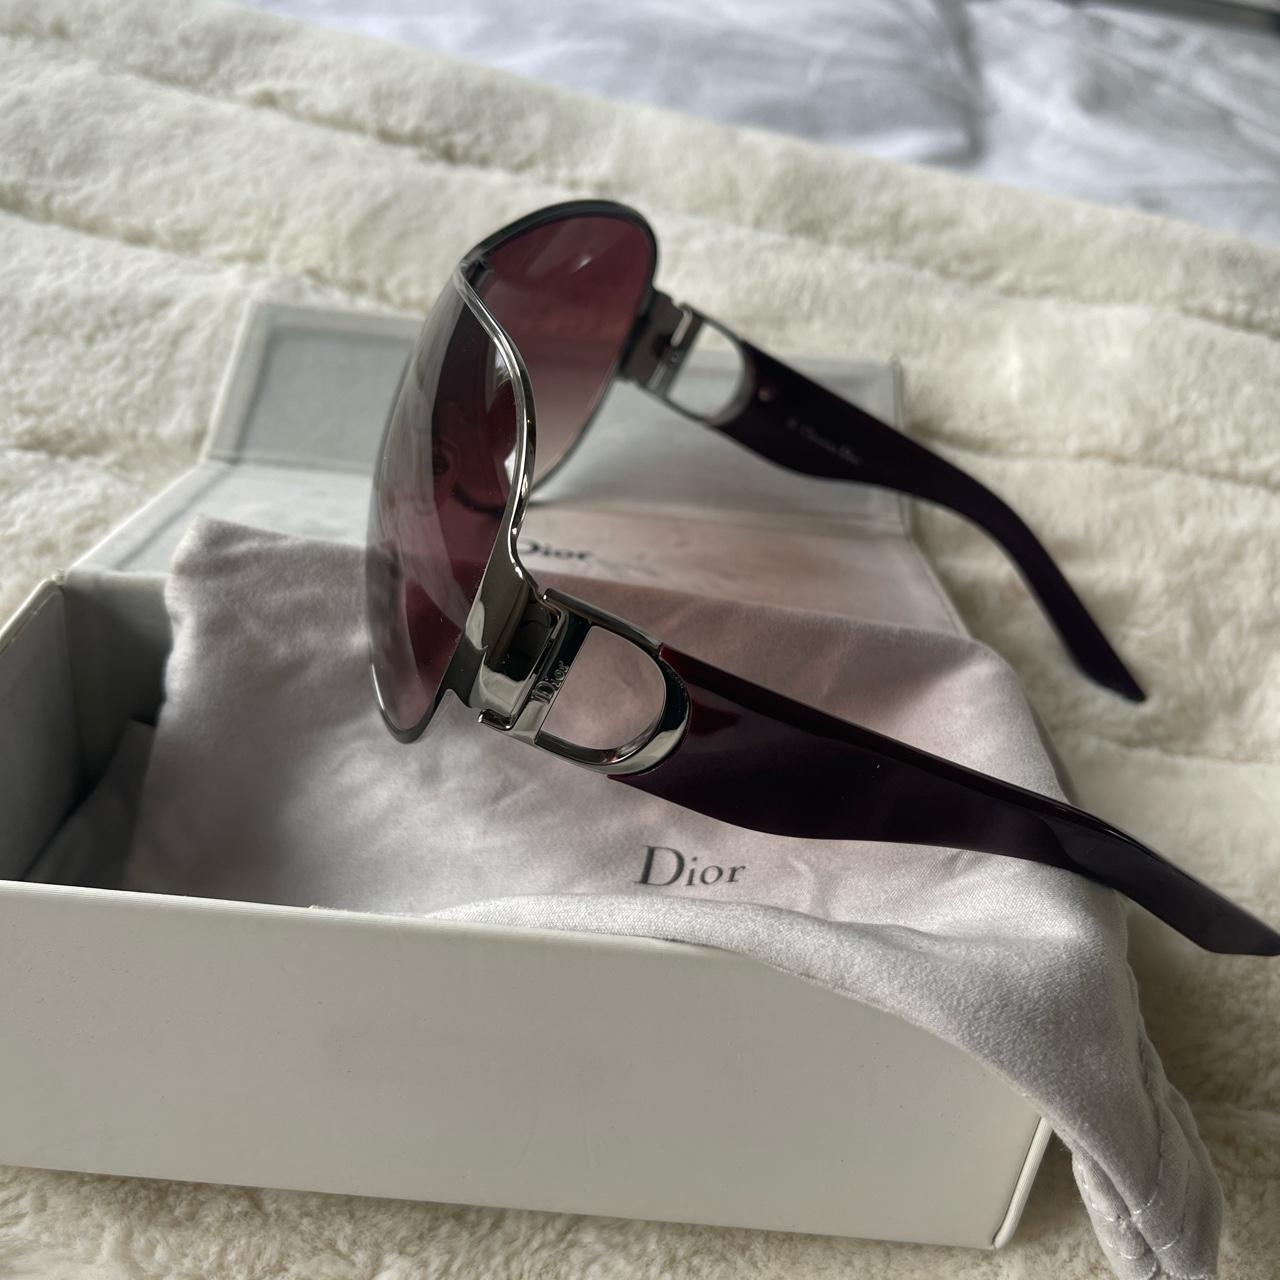 Authentic Dior Sunglasses - Plum - Worn Once (Vintage) - Depop